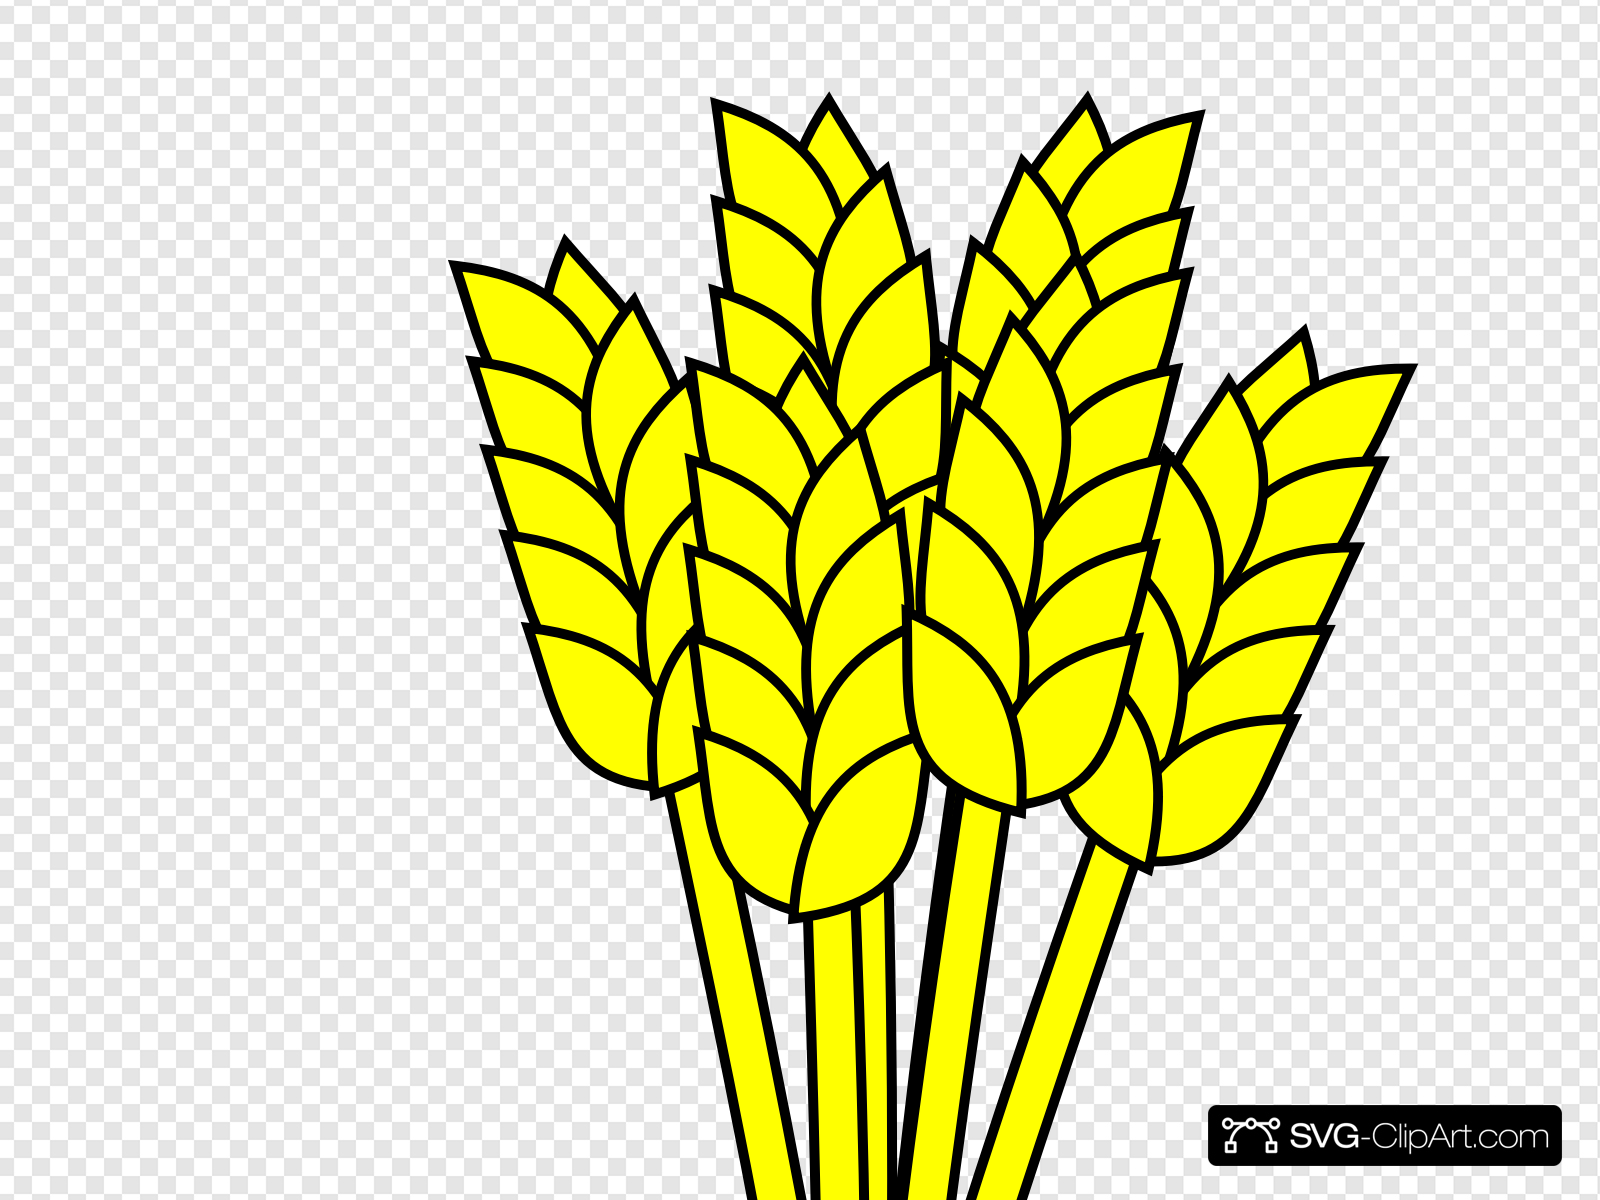 Wheat clip art.